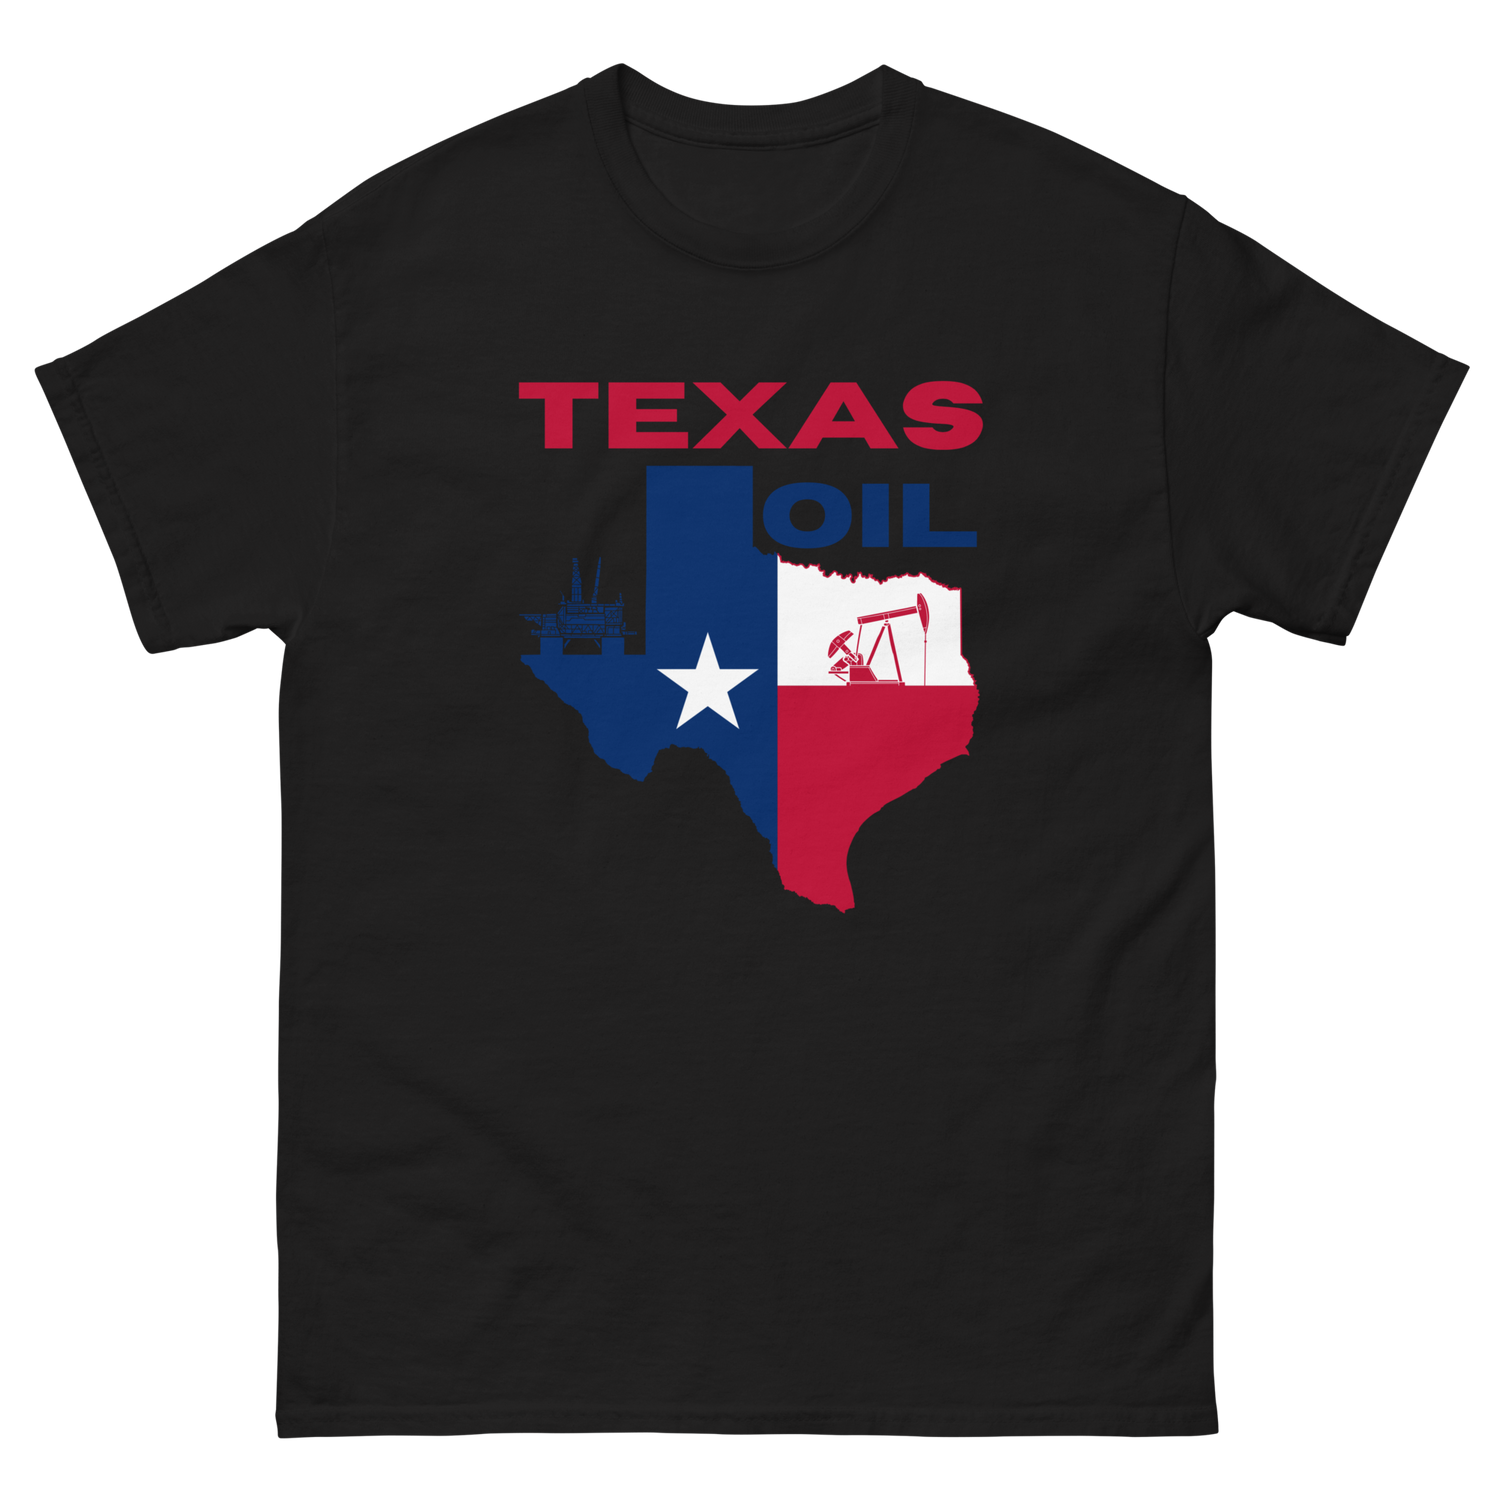 Texas Oil - Men's classic tee